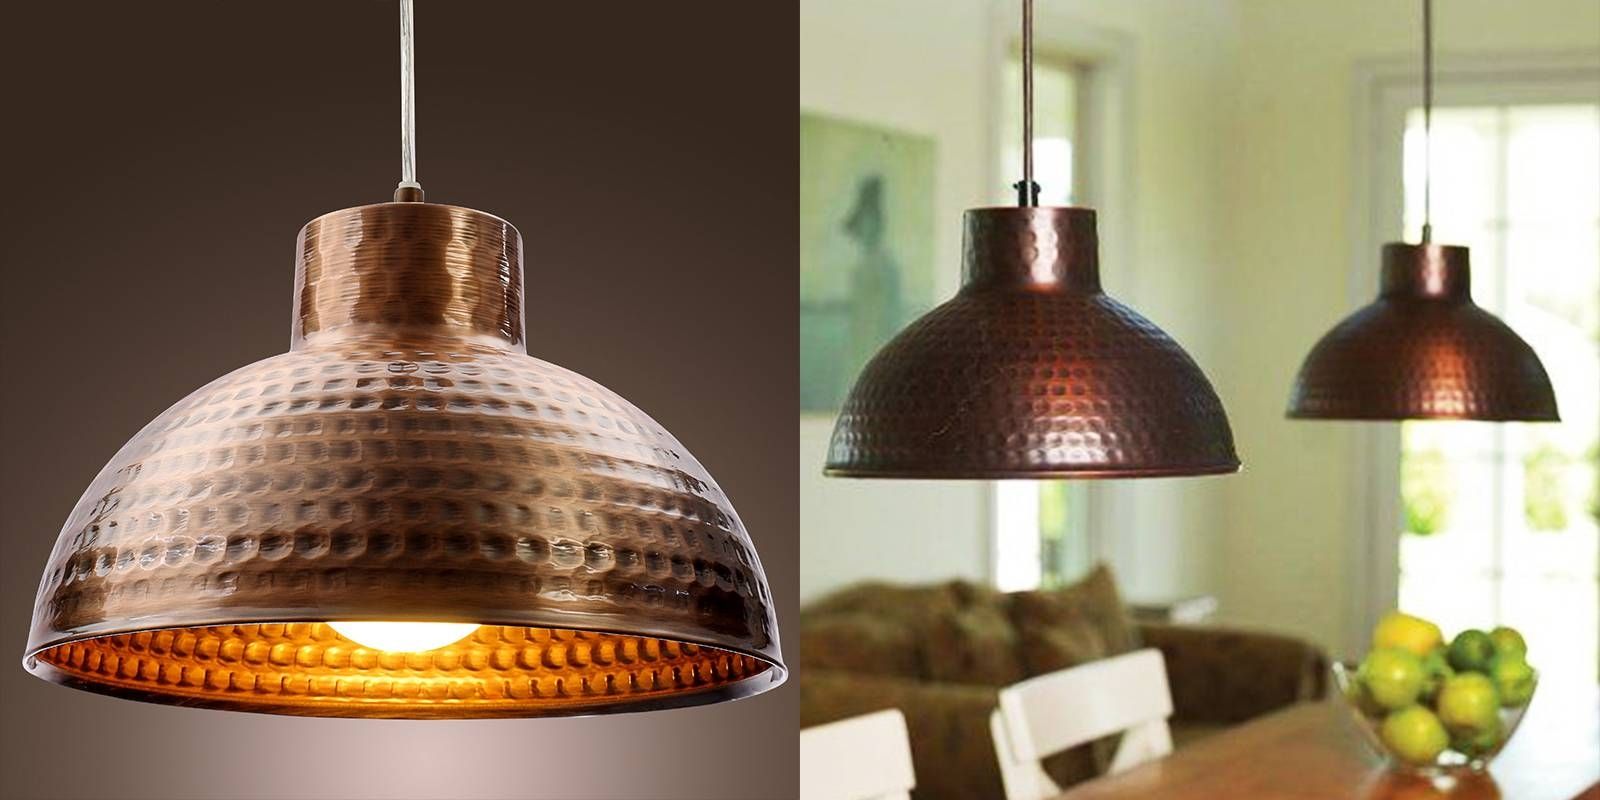 hammered copper lighting for kitchen